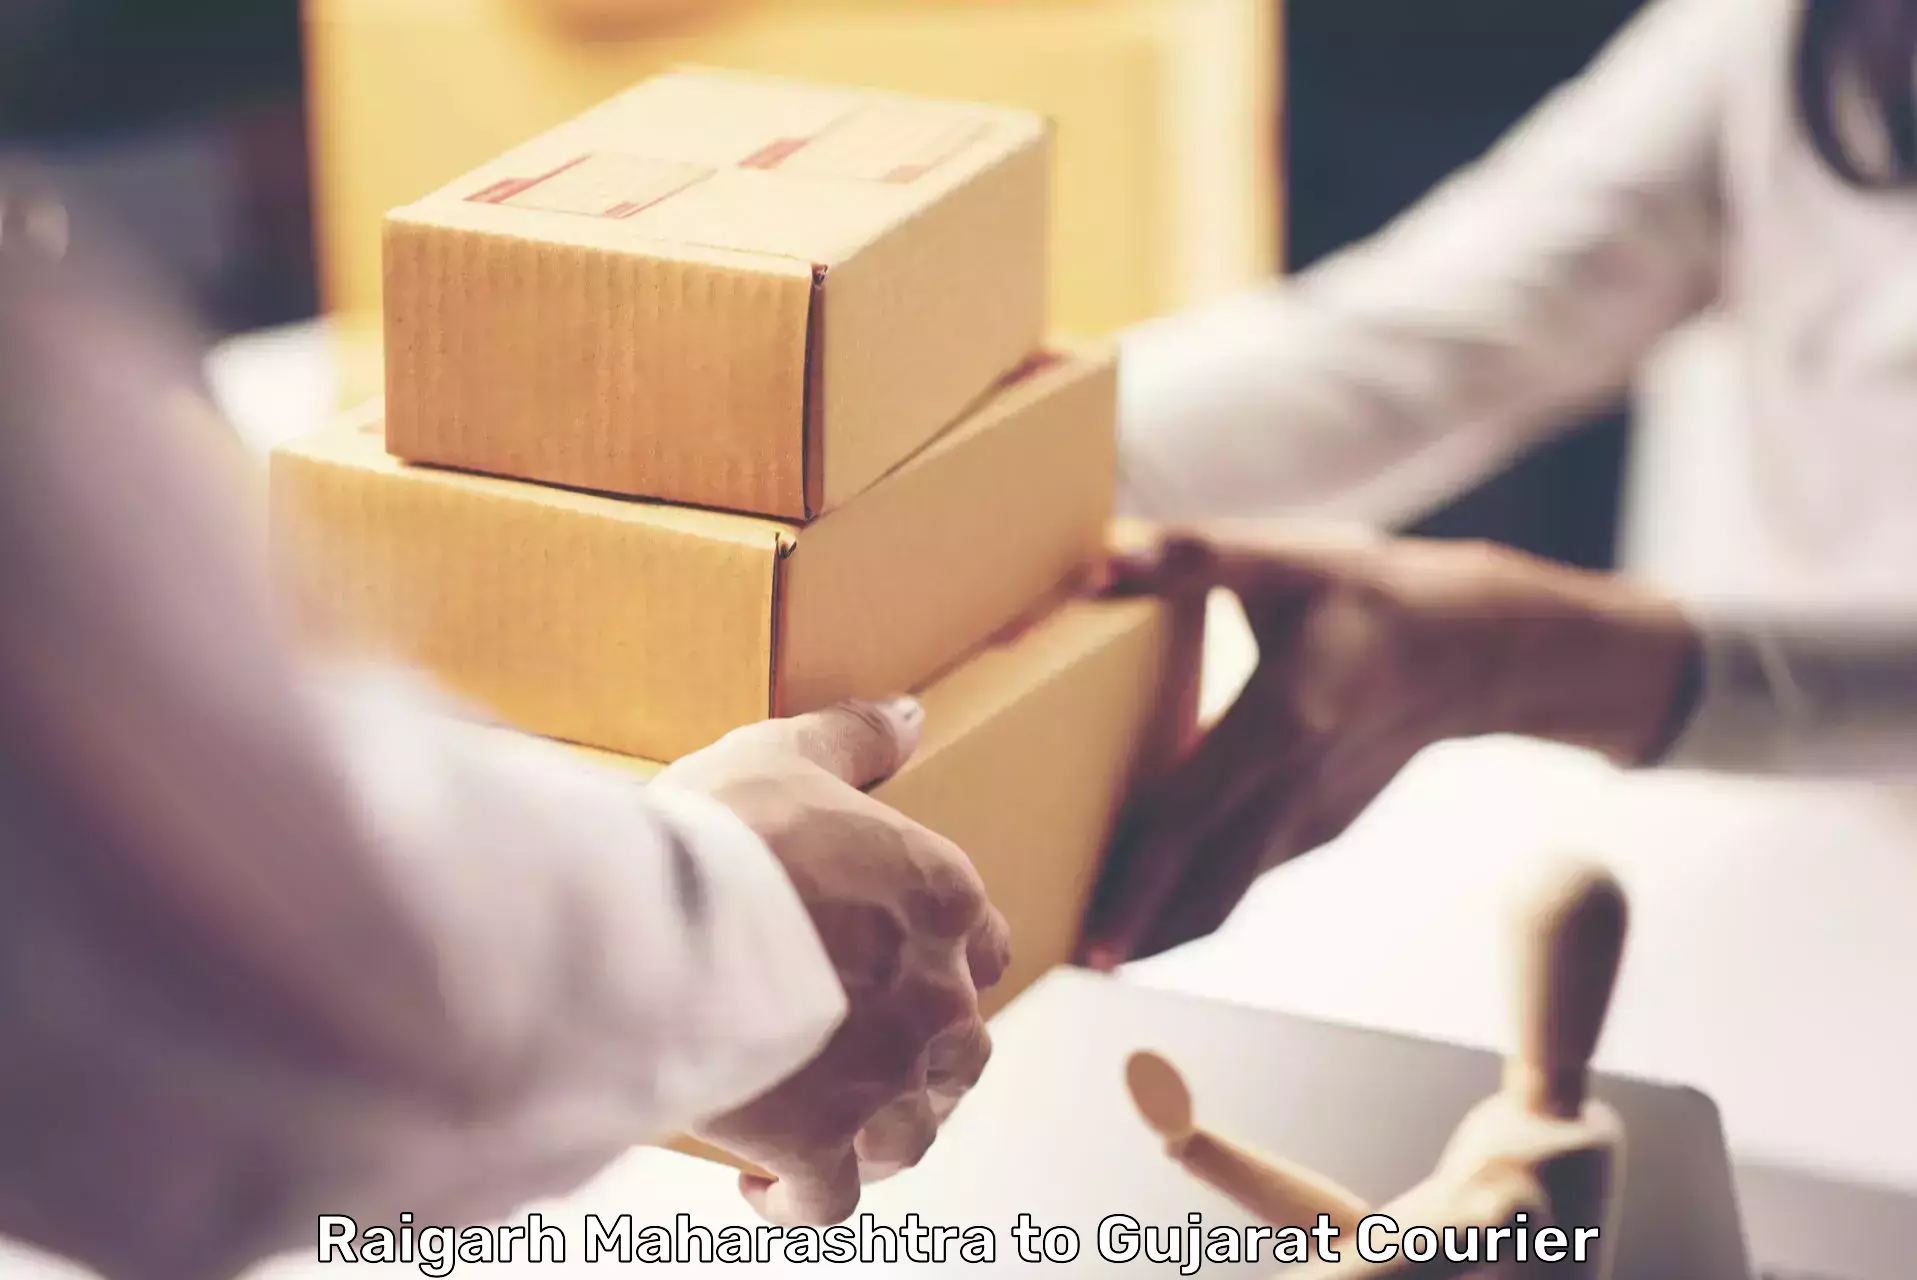 Corporate courier solutions Raigarh Maharashtra to Deesa